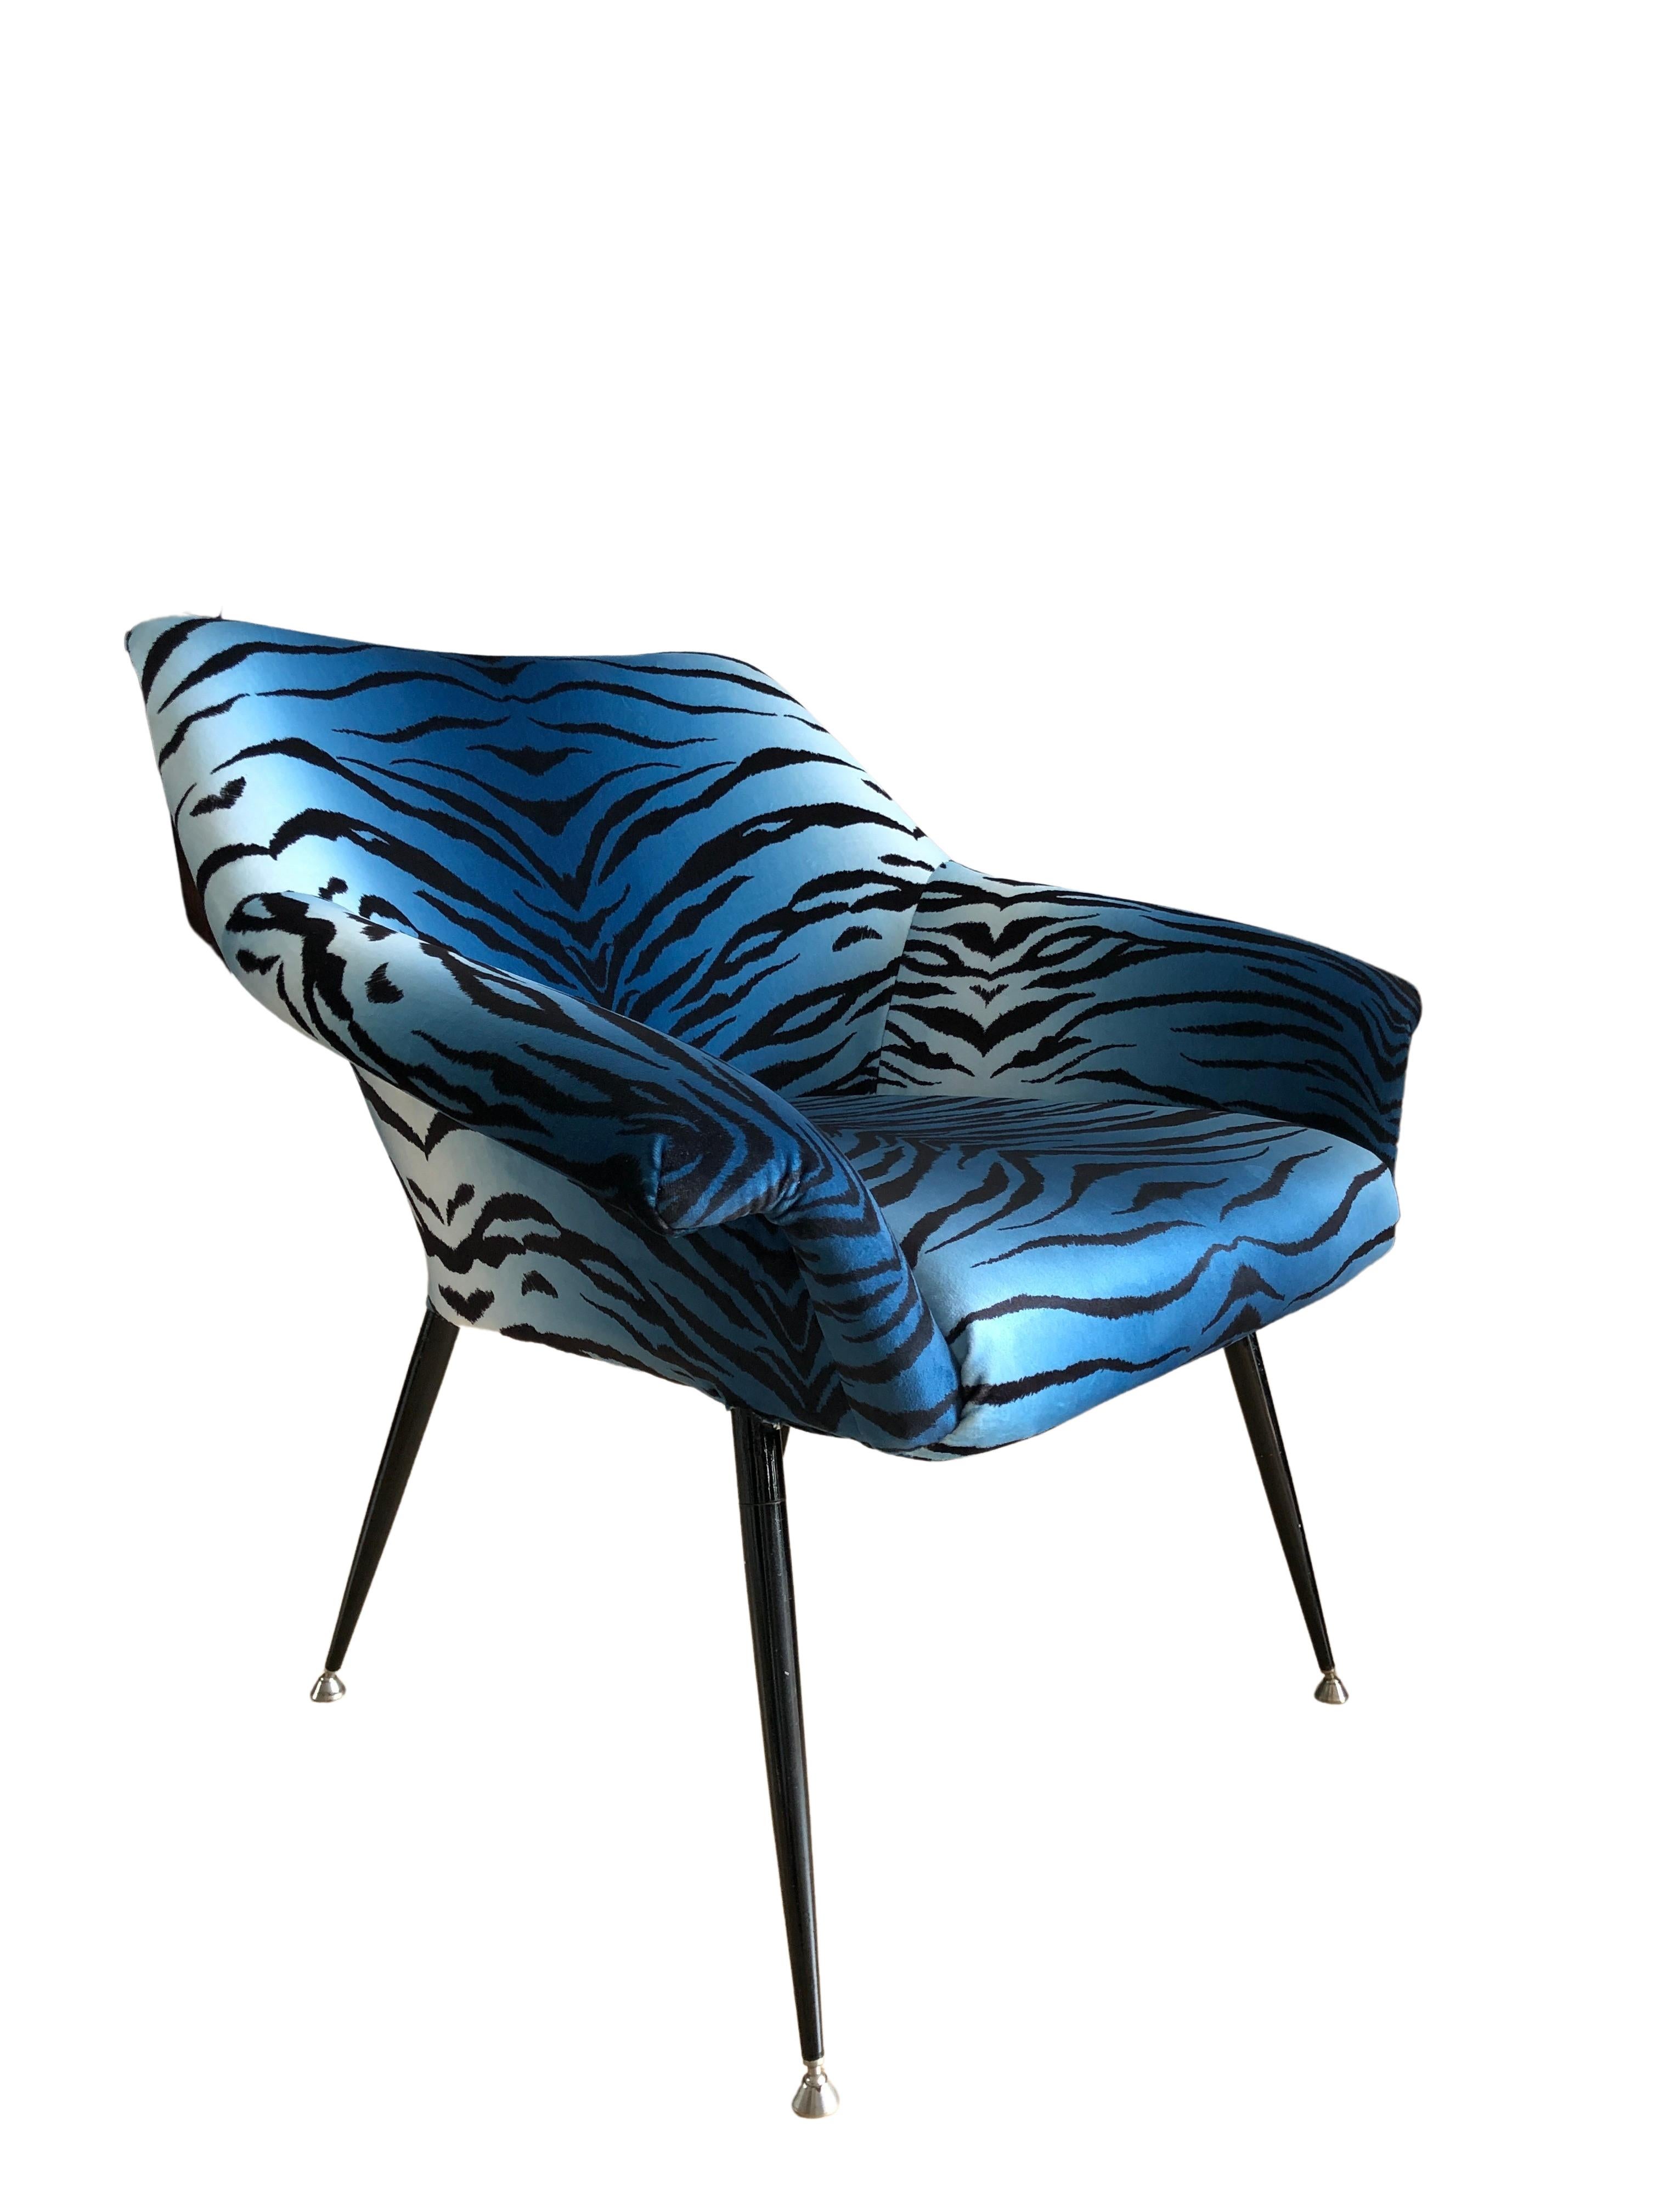 Metal Midcentury Armchair, in Blue Zebra Print Velvet, Europe, 1960s For Sale